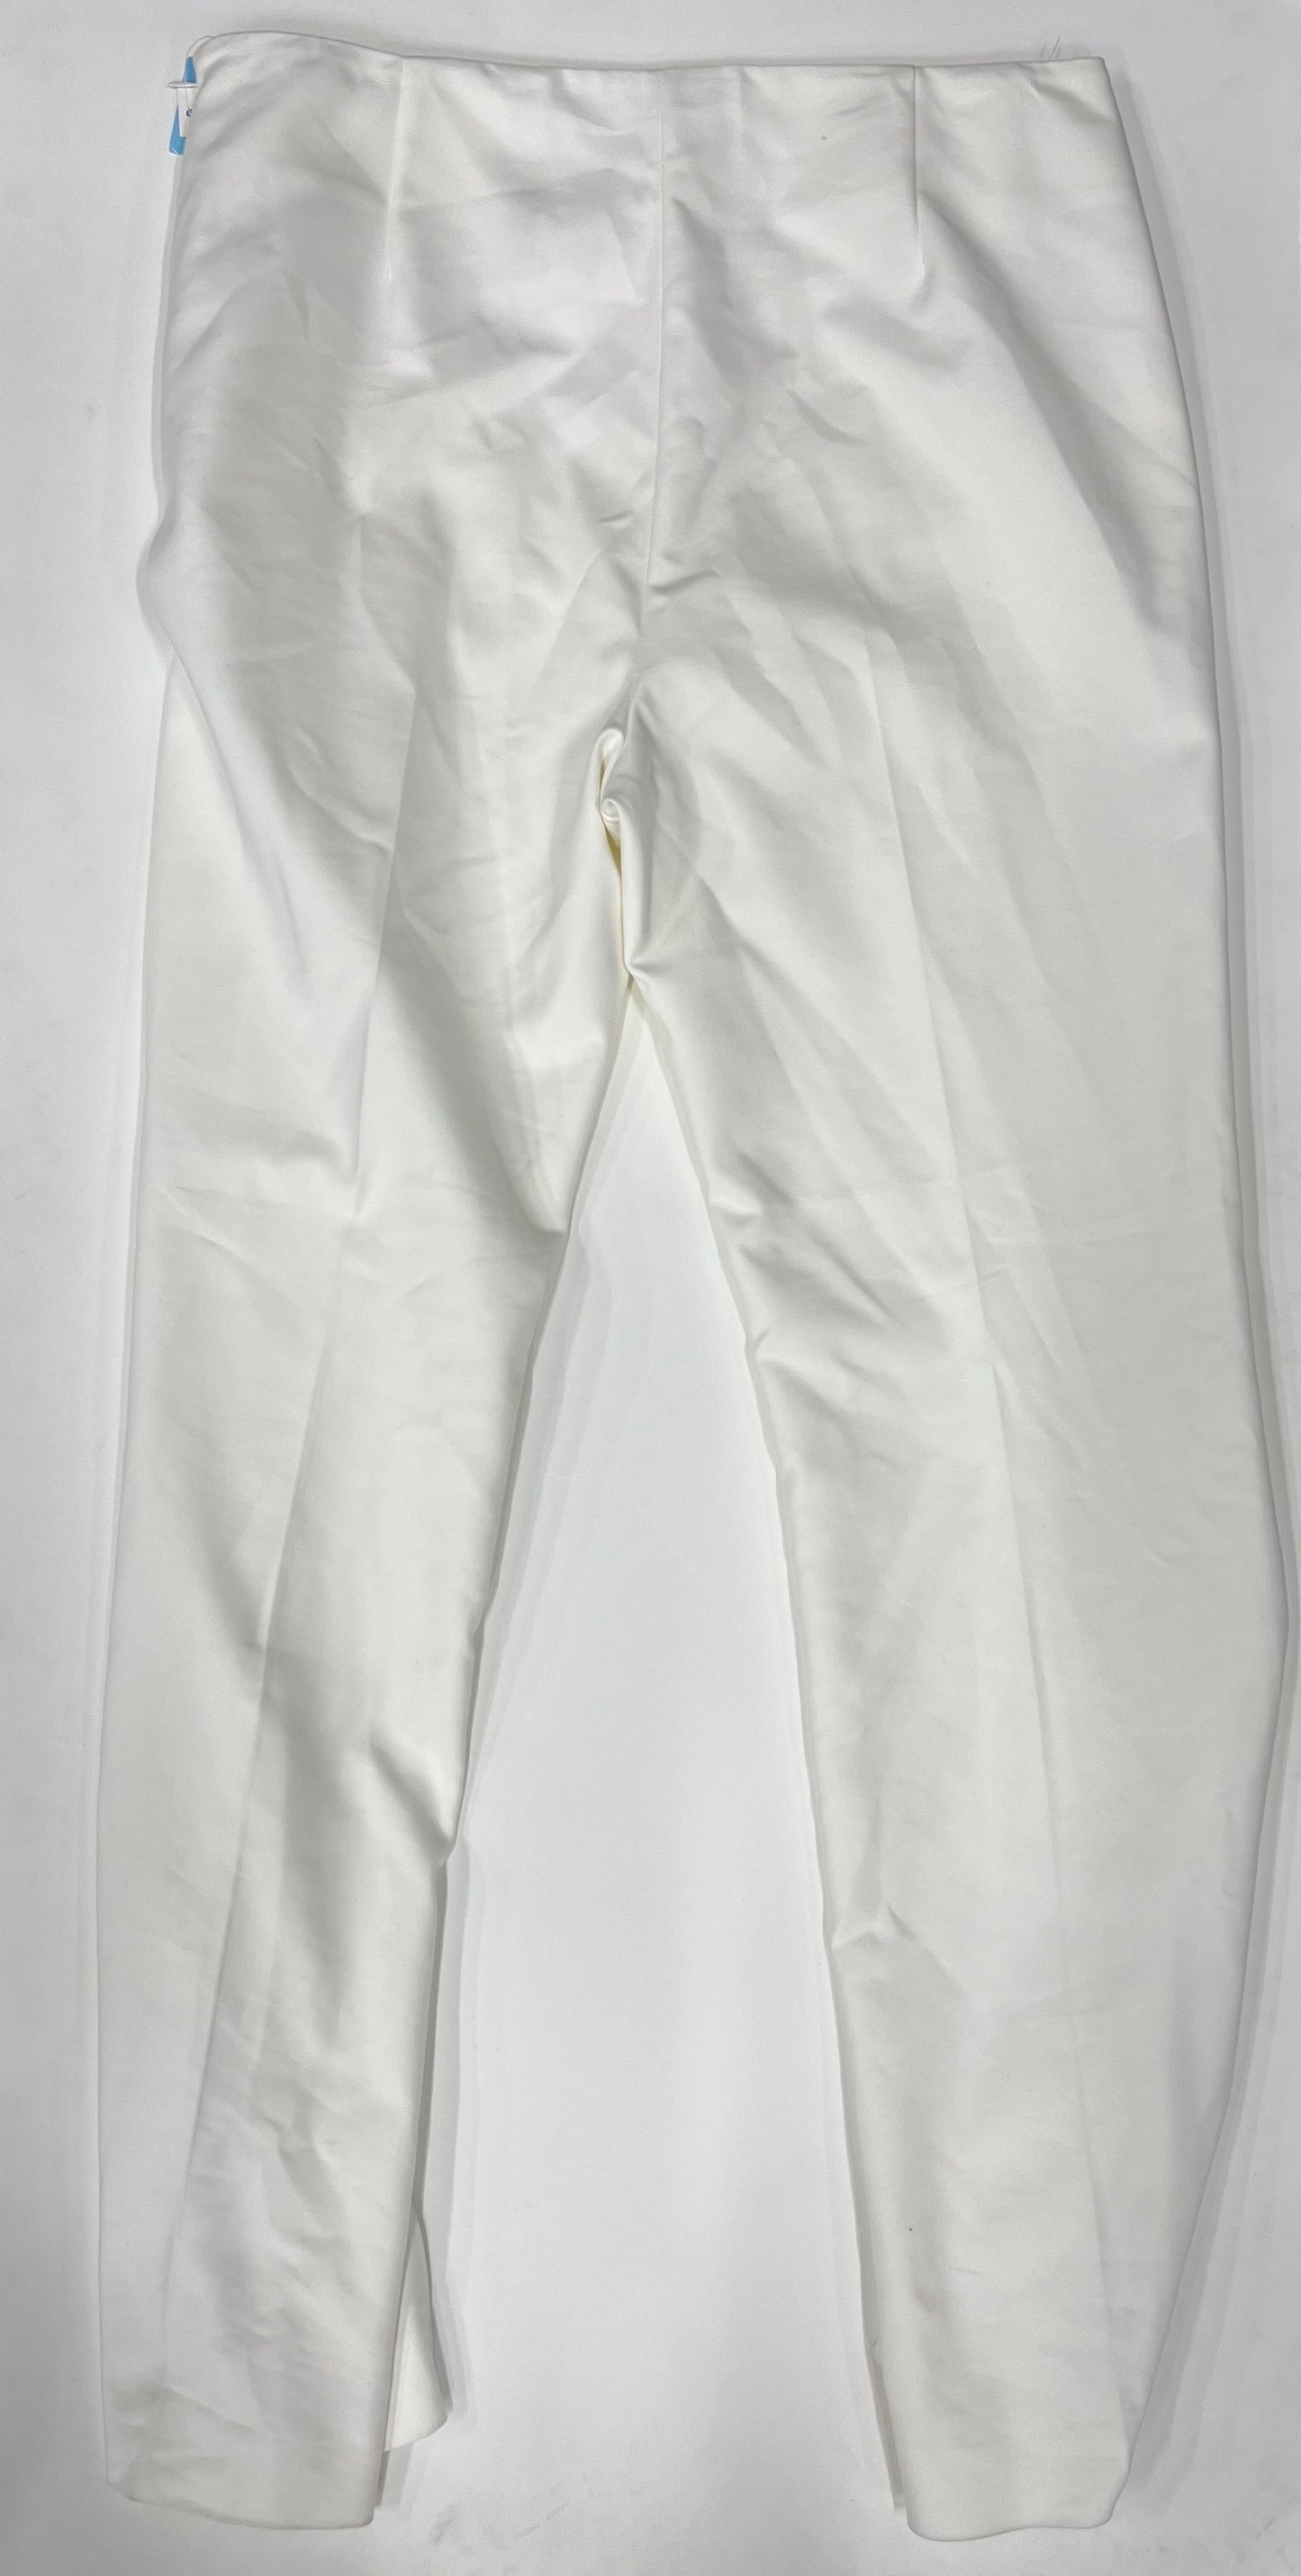 Pants Work/dress By Antonio Melani NWT  Size: 14